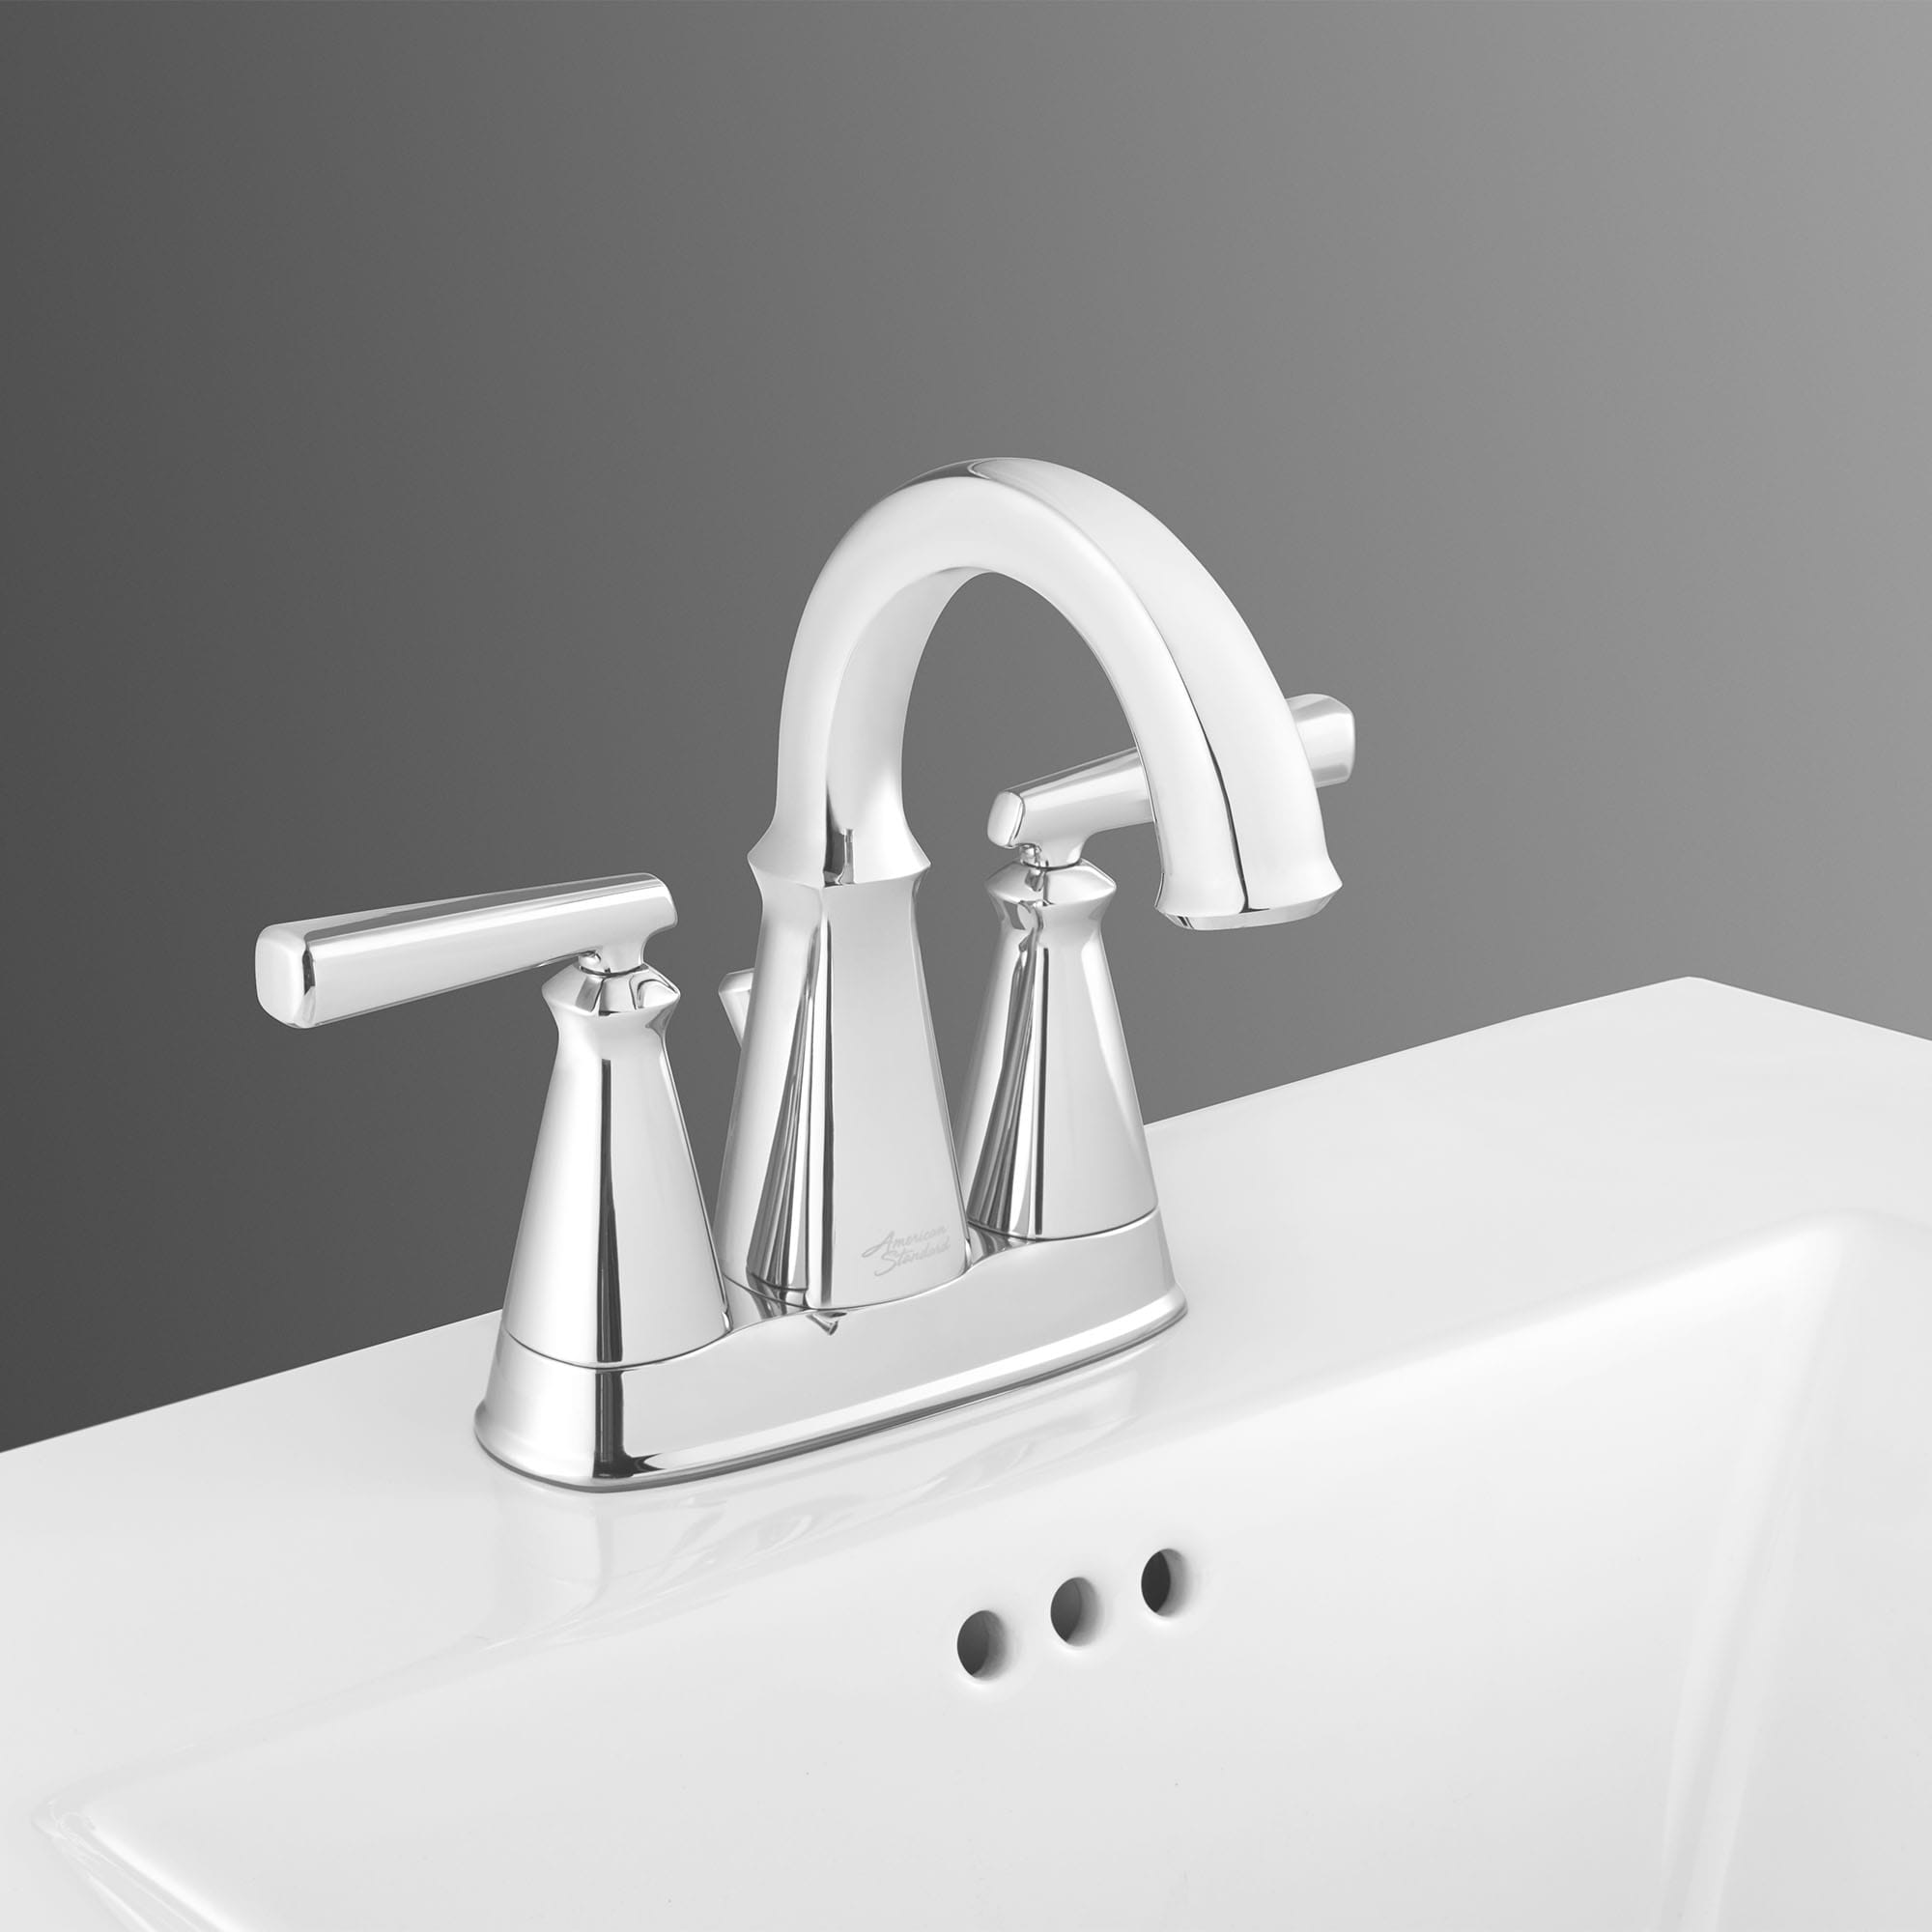 Edgemere 4 Inch Centerset 2 Handle Bathroom Faucet 12 gmp 45 L min With Lever Handles CHROME